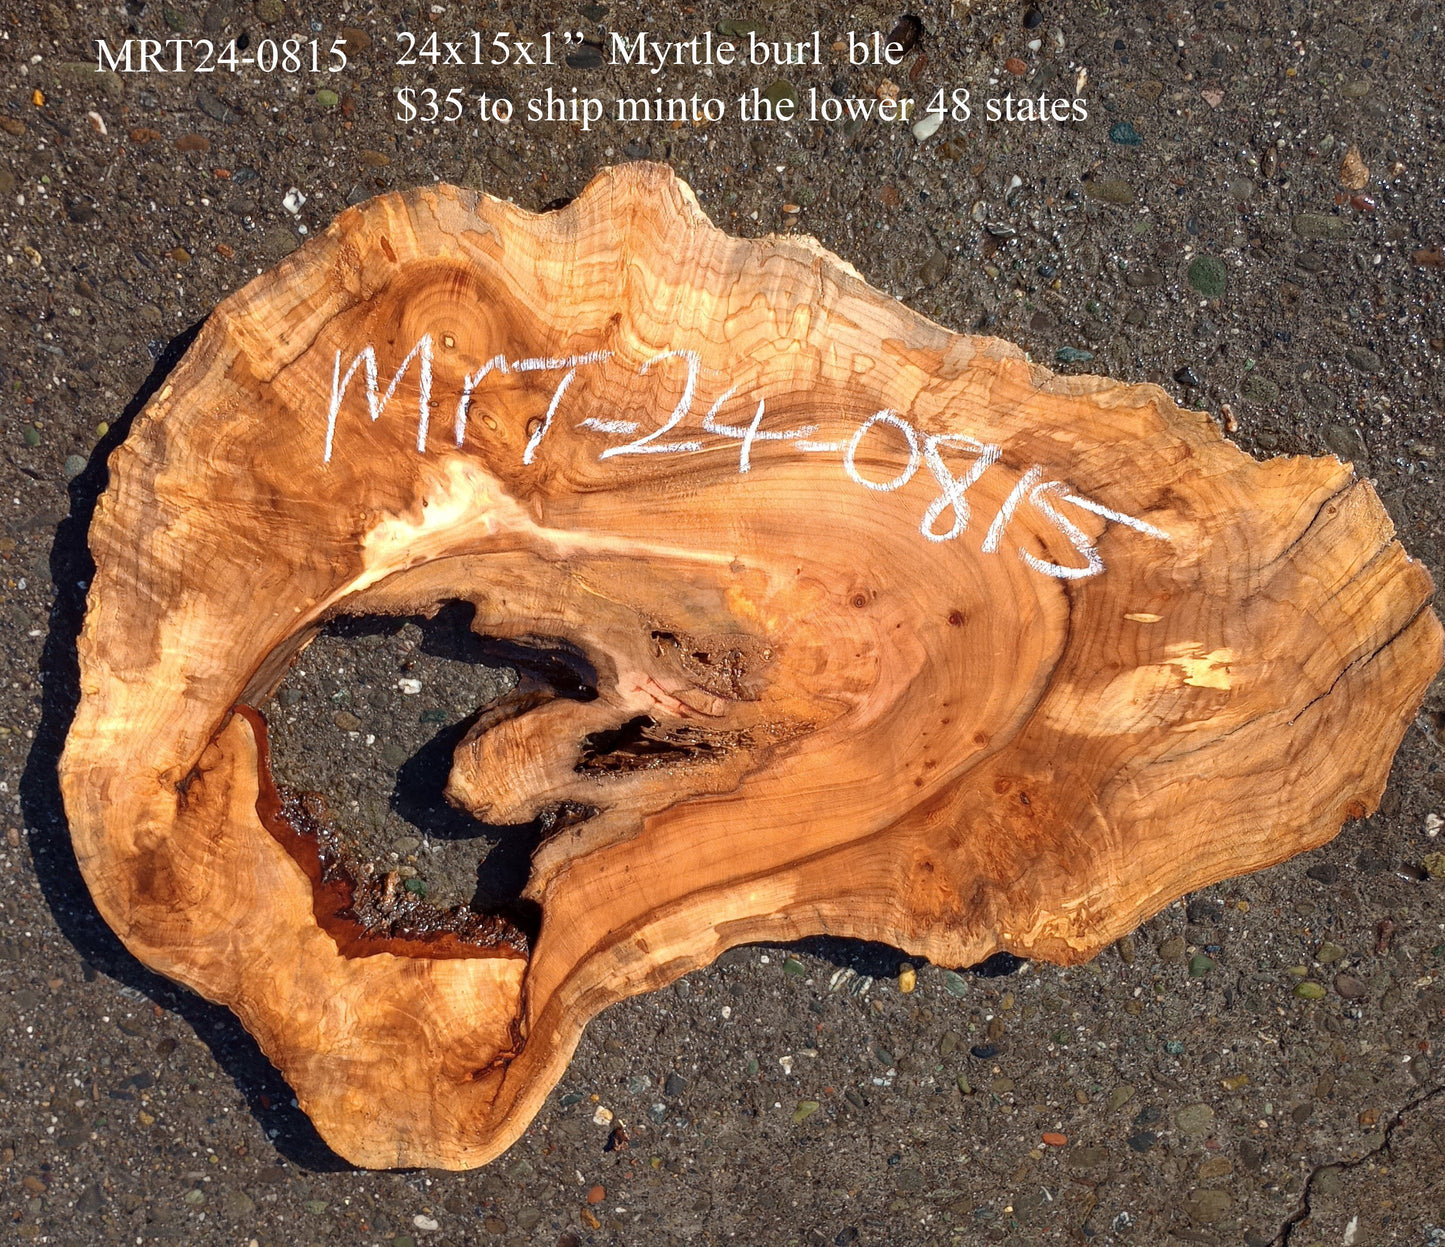 Myrtle burl | Exotic Wood | Wall Art | DIY Wood Crafts | Mrt24-0815